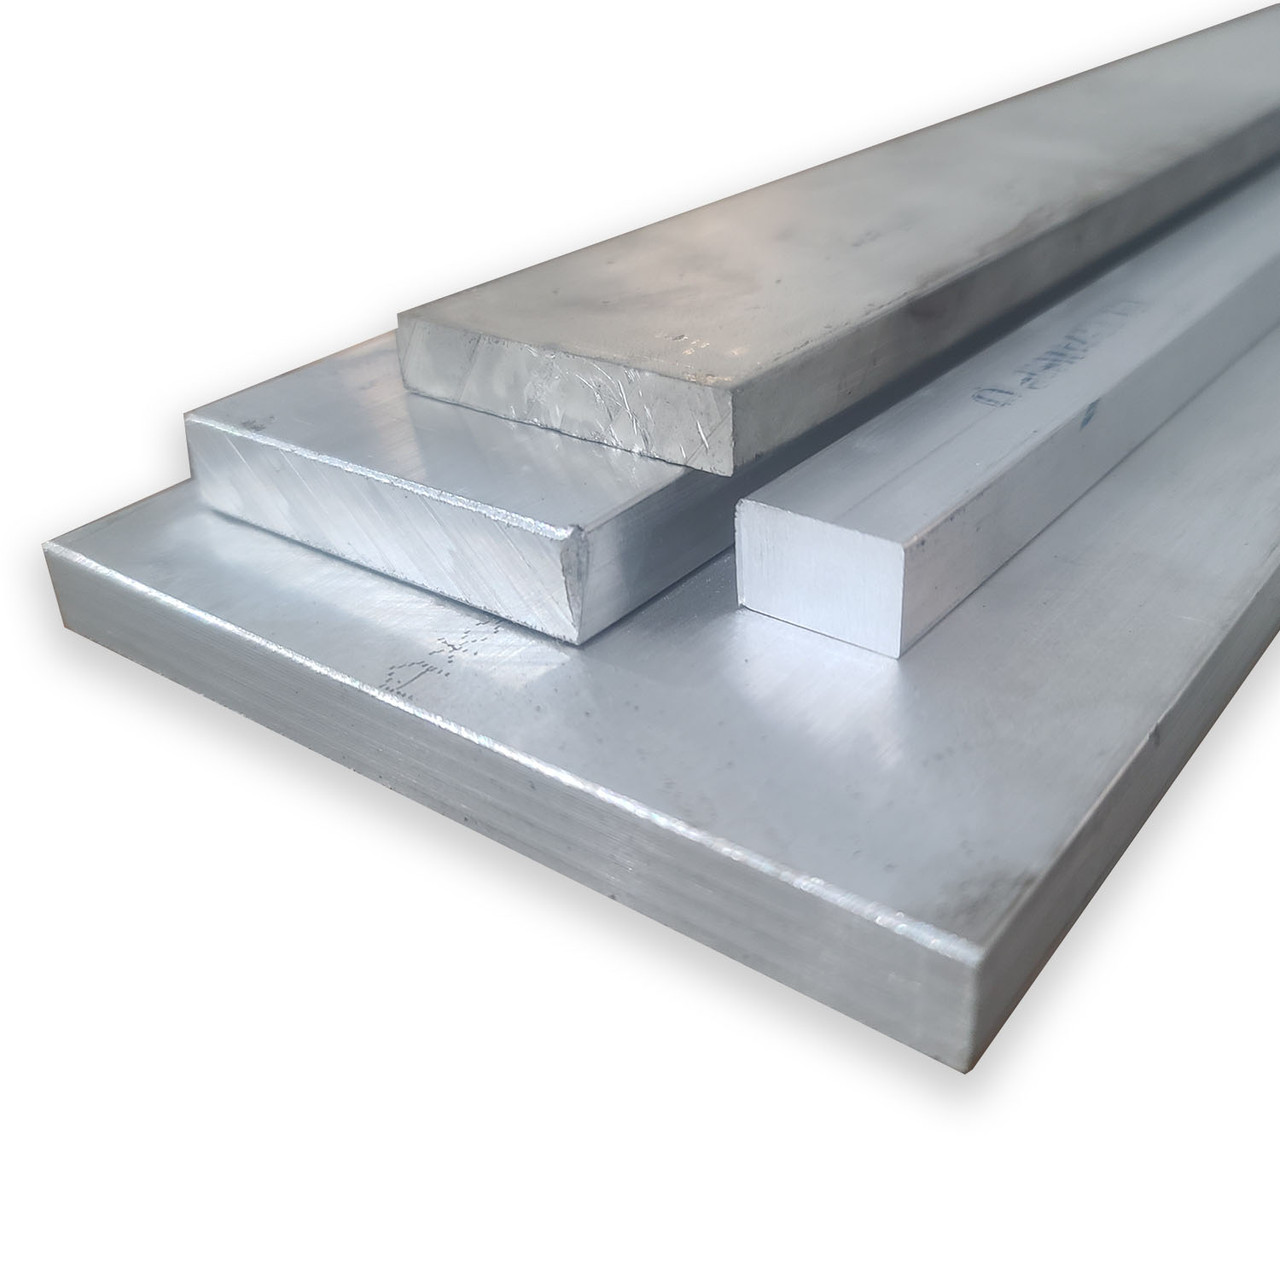 0.500" x 2" x 19", 6061-T6511 Aluminum Flat Bar